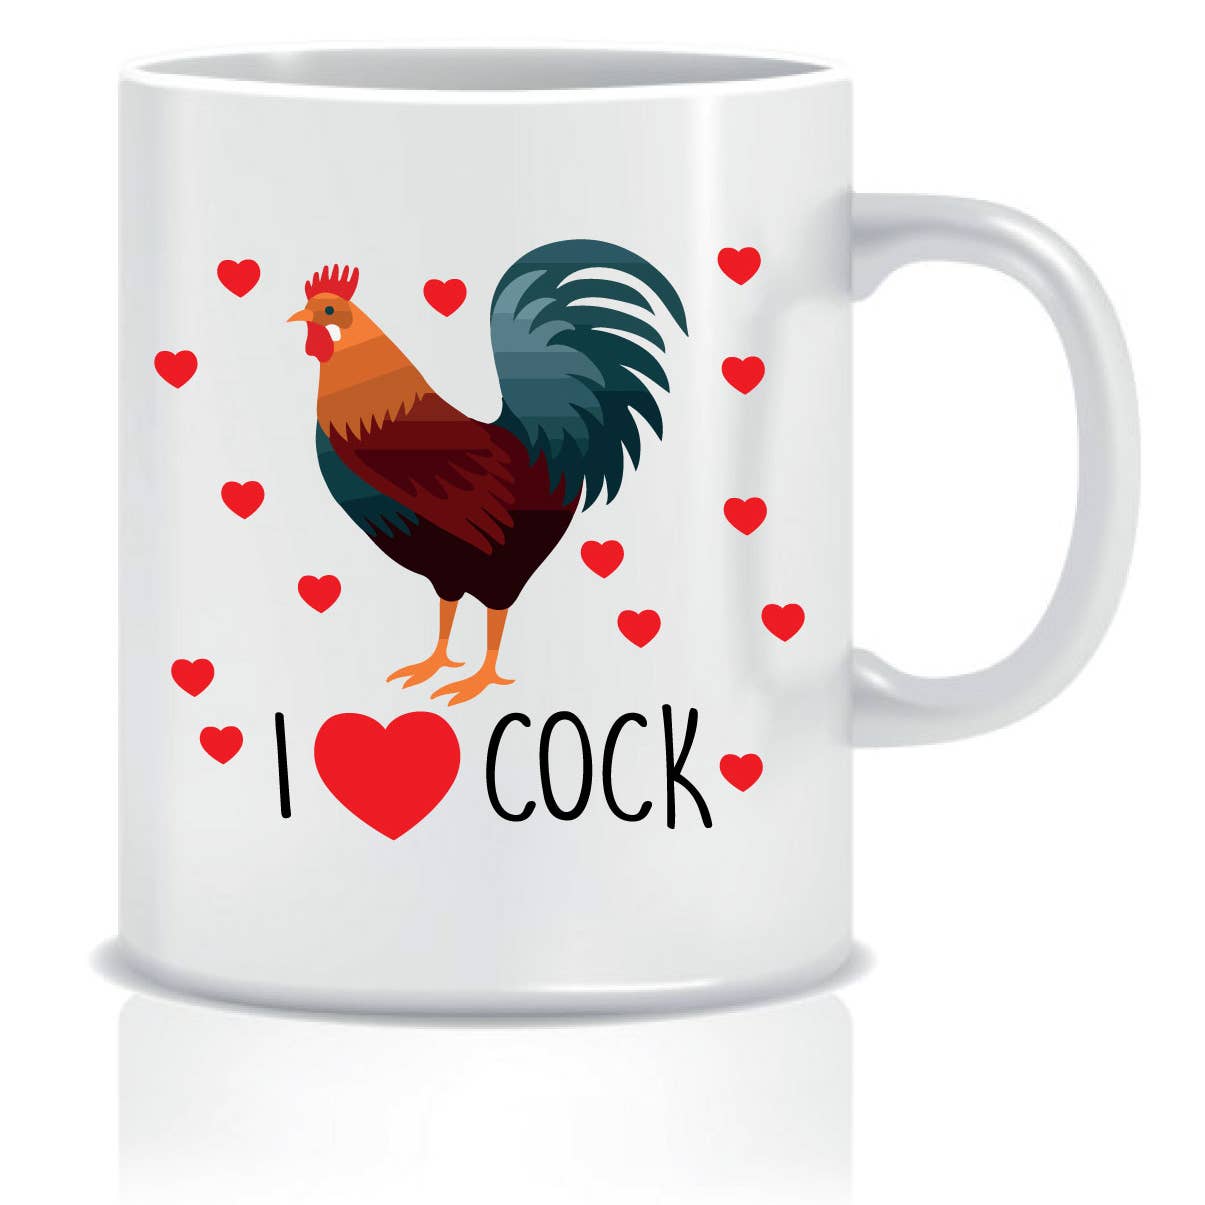 I Heart Cock Mug